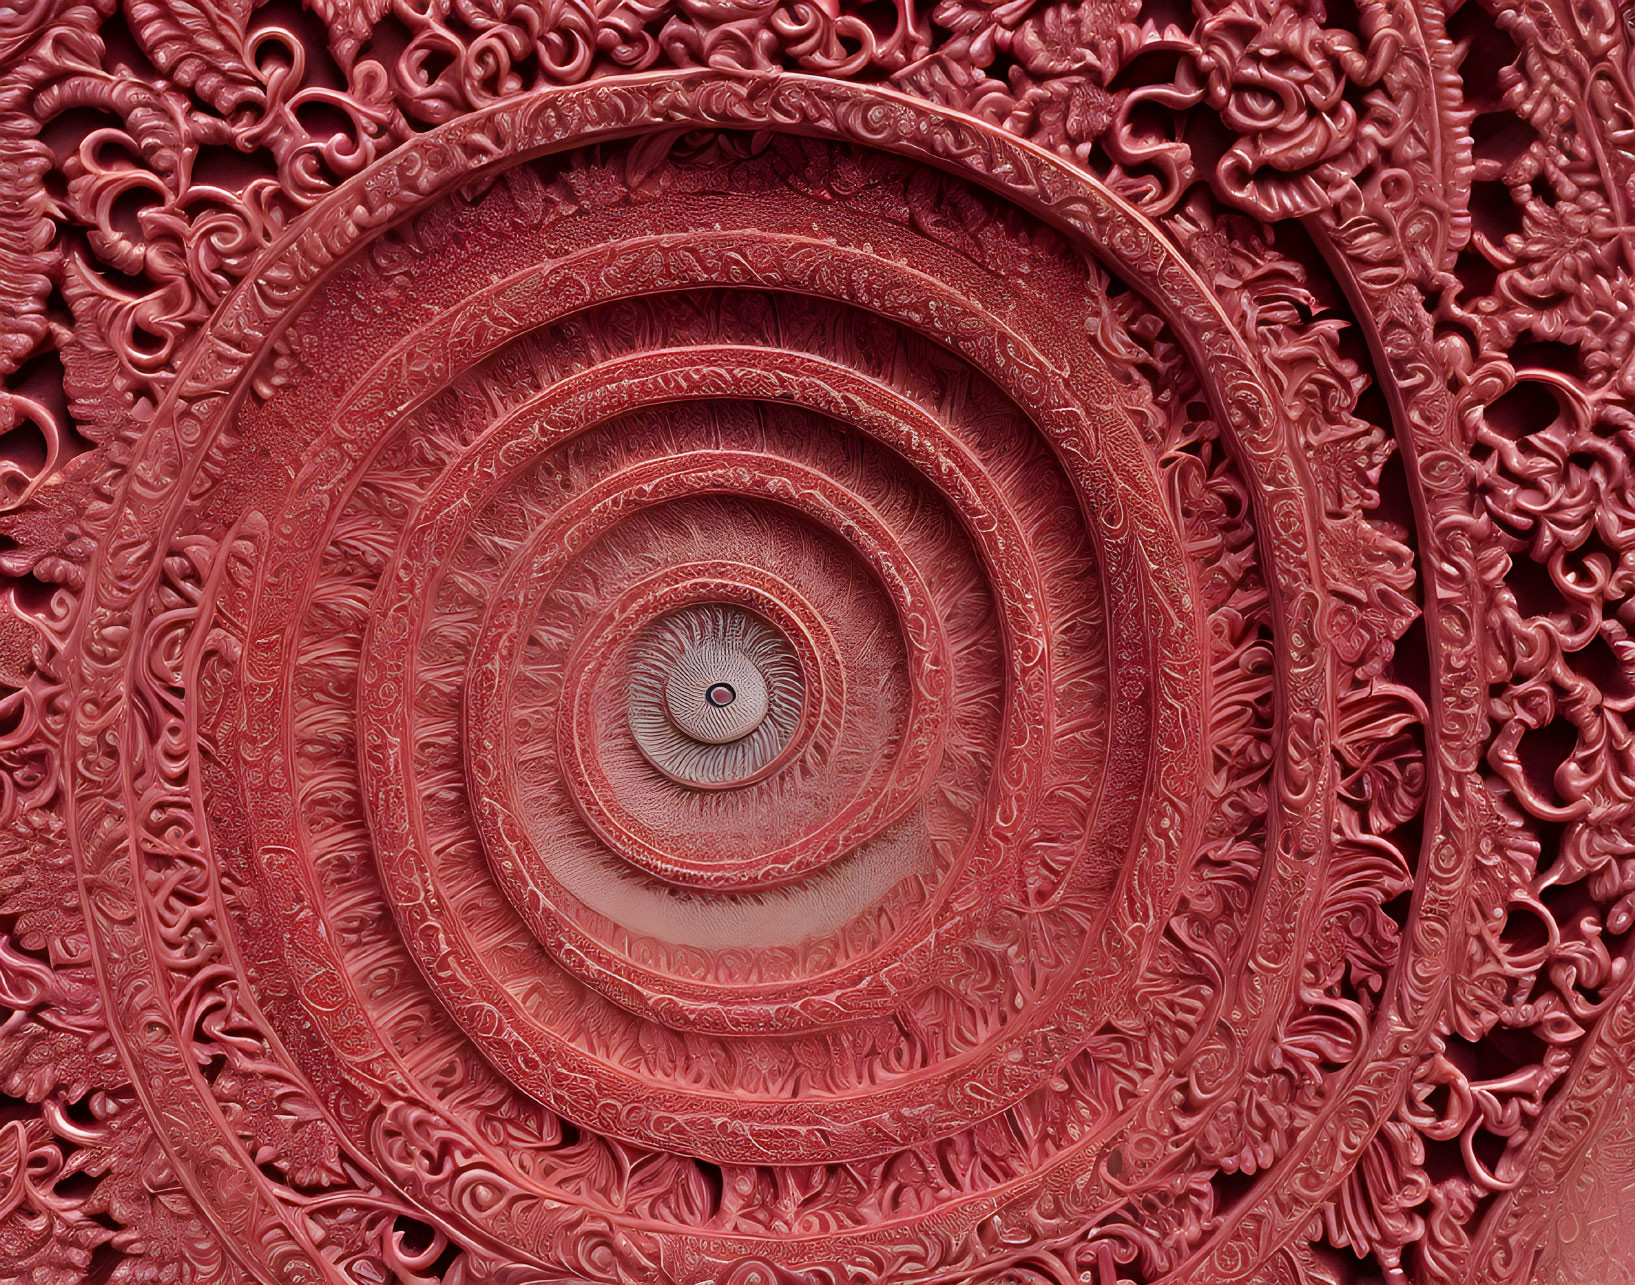 Intricate Red Circular Artwork with Elaborate Carvings and Spiraling Designs